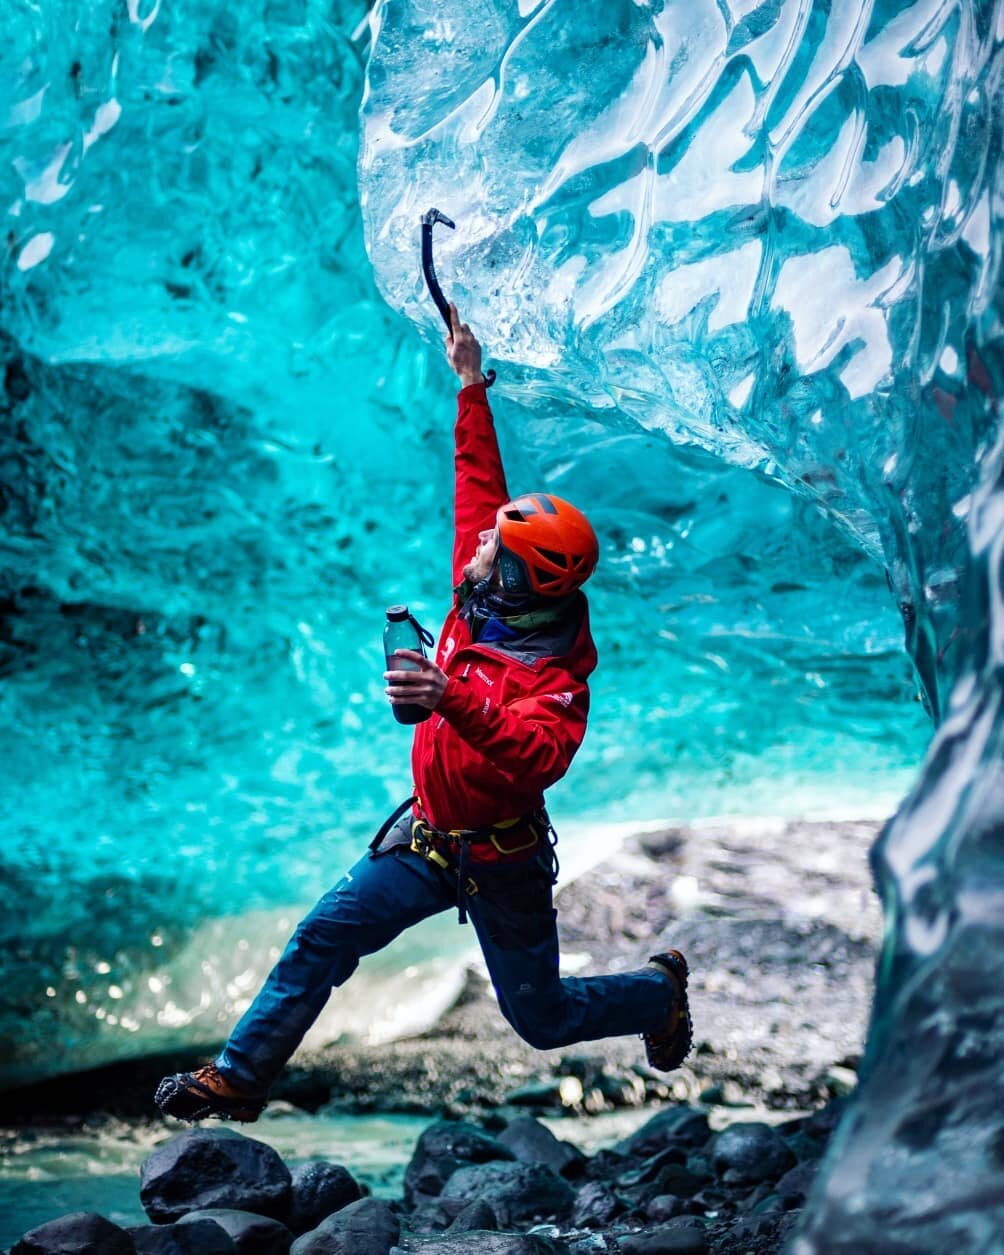 What it looks like to &quot;send it for the gram&quot; in an Icelandic glacier 🧊❄️🇮🇸
.
.
.
.
.
.
.
.
.
.
.
#iceland #glacier #climbing #iceclimbing #travel #adventure #adventuregear #crampons #winter #ringroad #hofn #roadtrip #nikon #getoutstayout